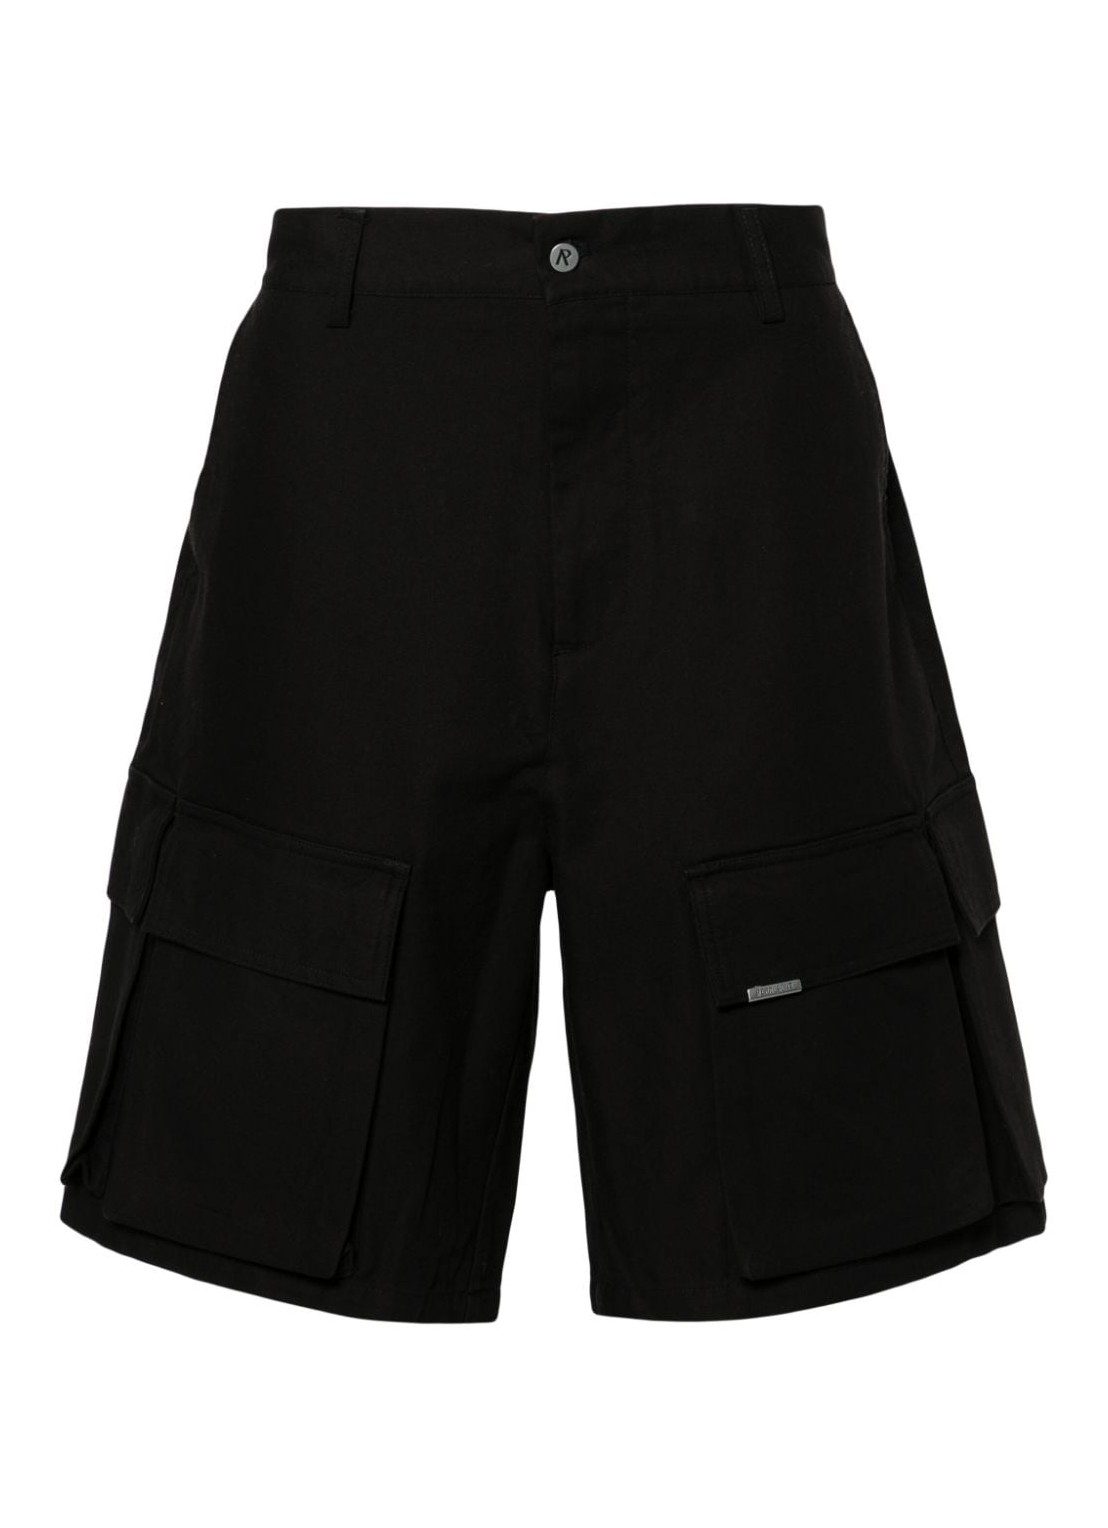 Pantalon corto represent short pant man baggy cotton cargo short mlm715 01 talla negro
 